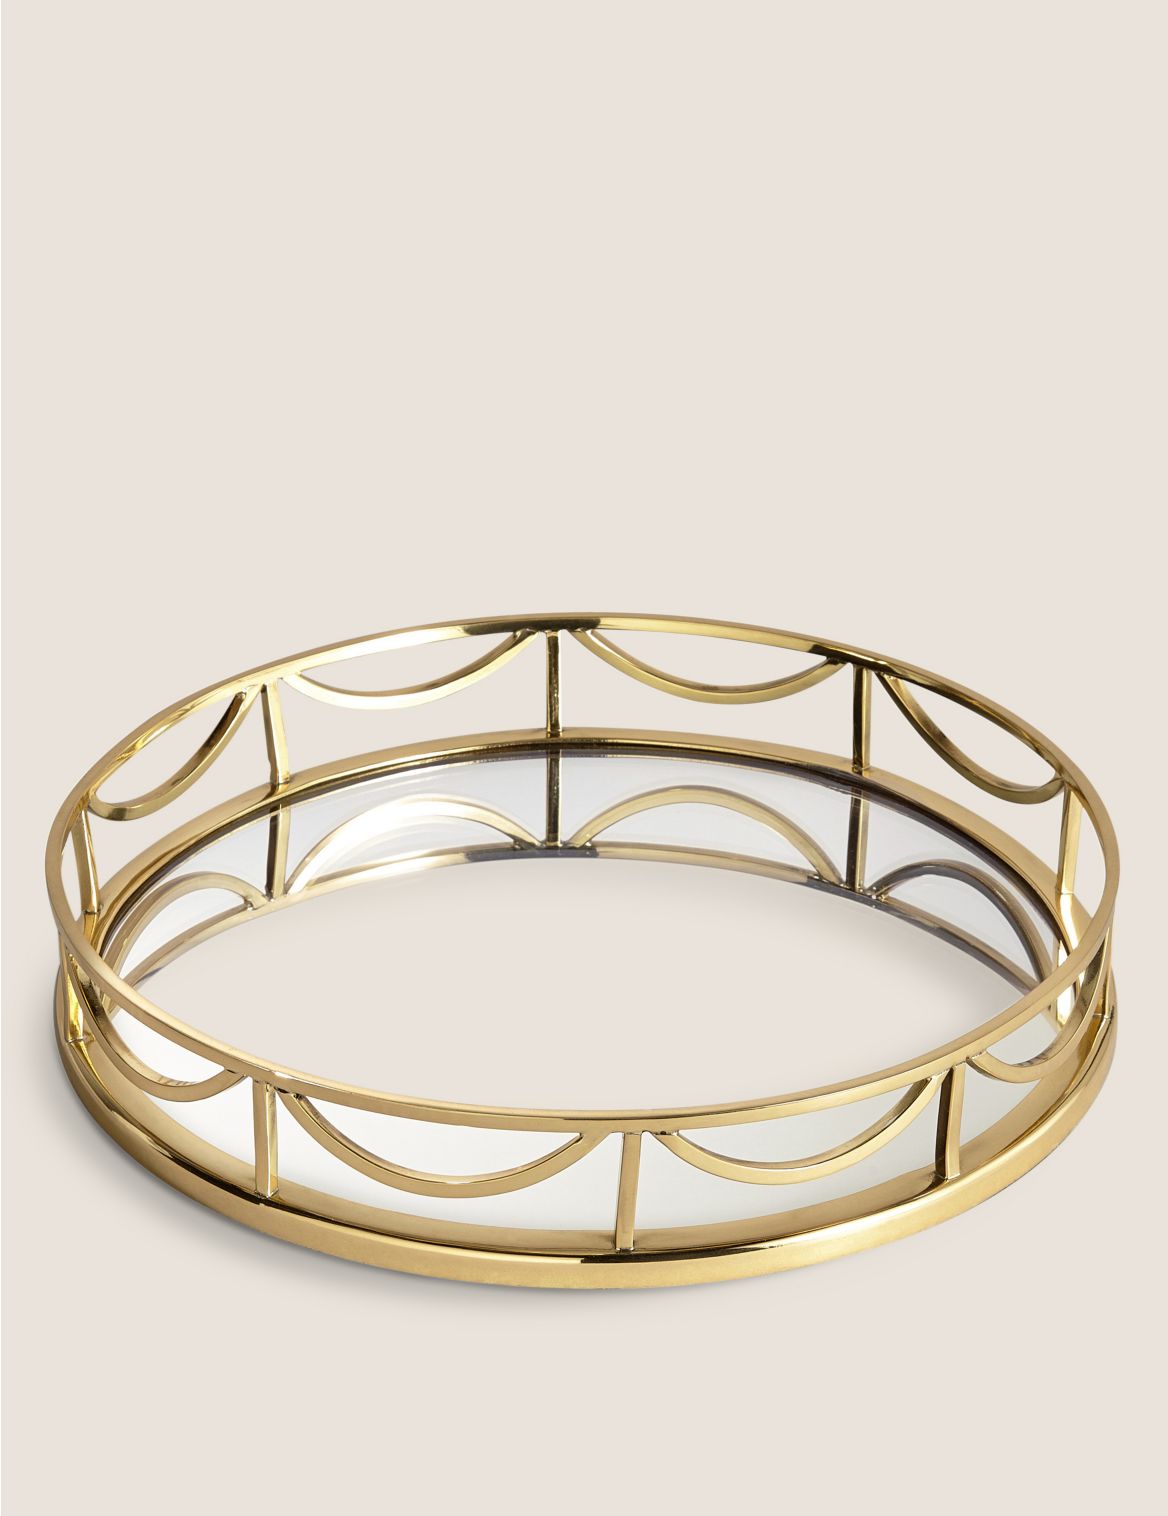 Deco Mirrored Round Tray gold